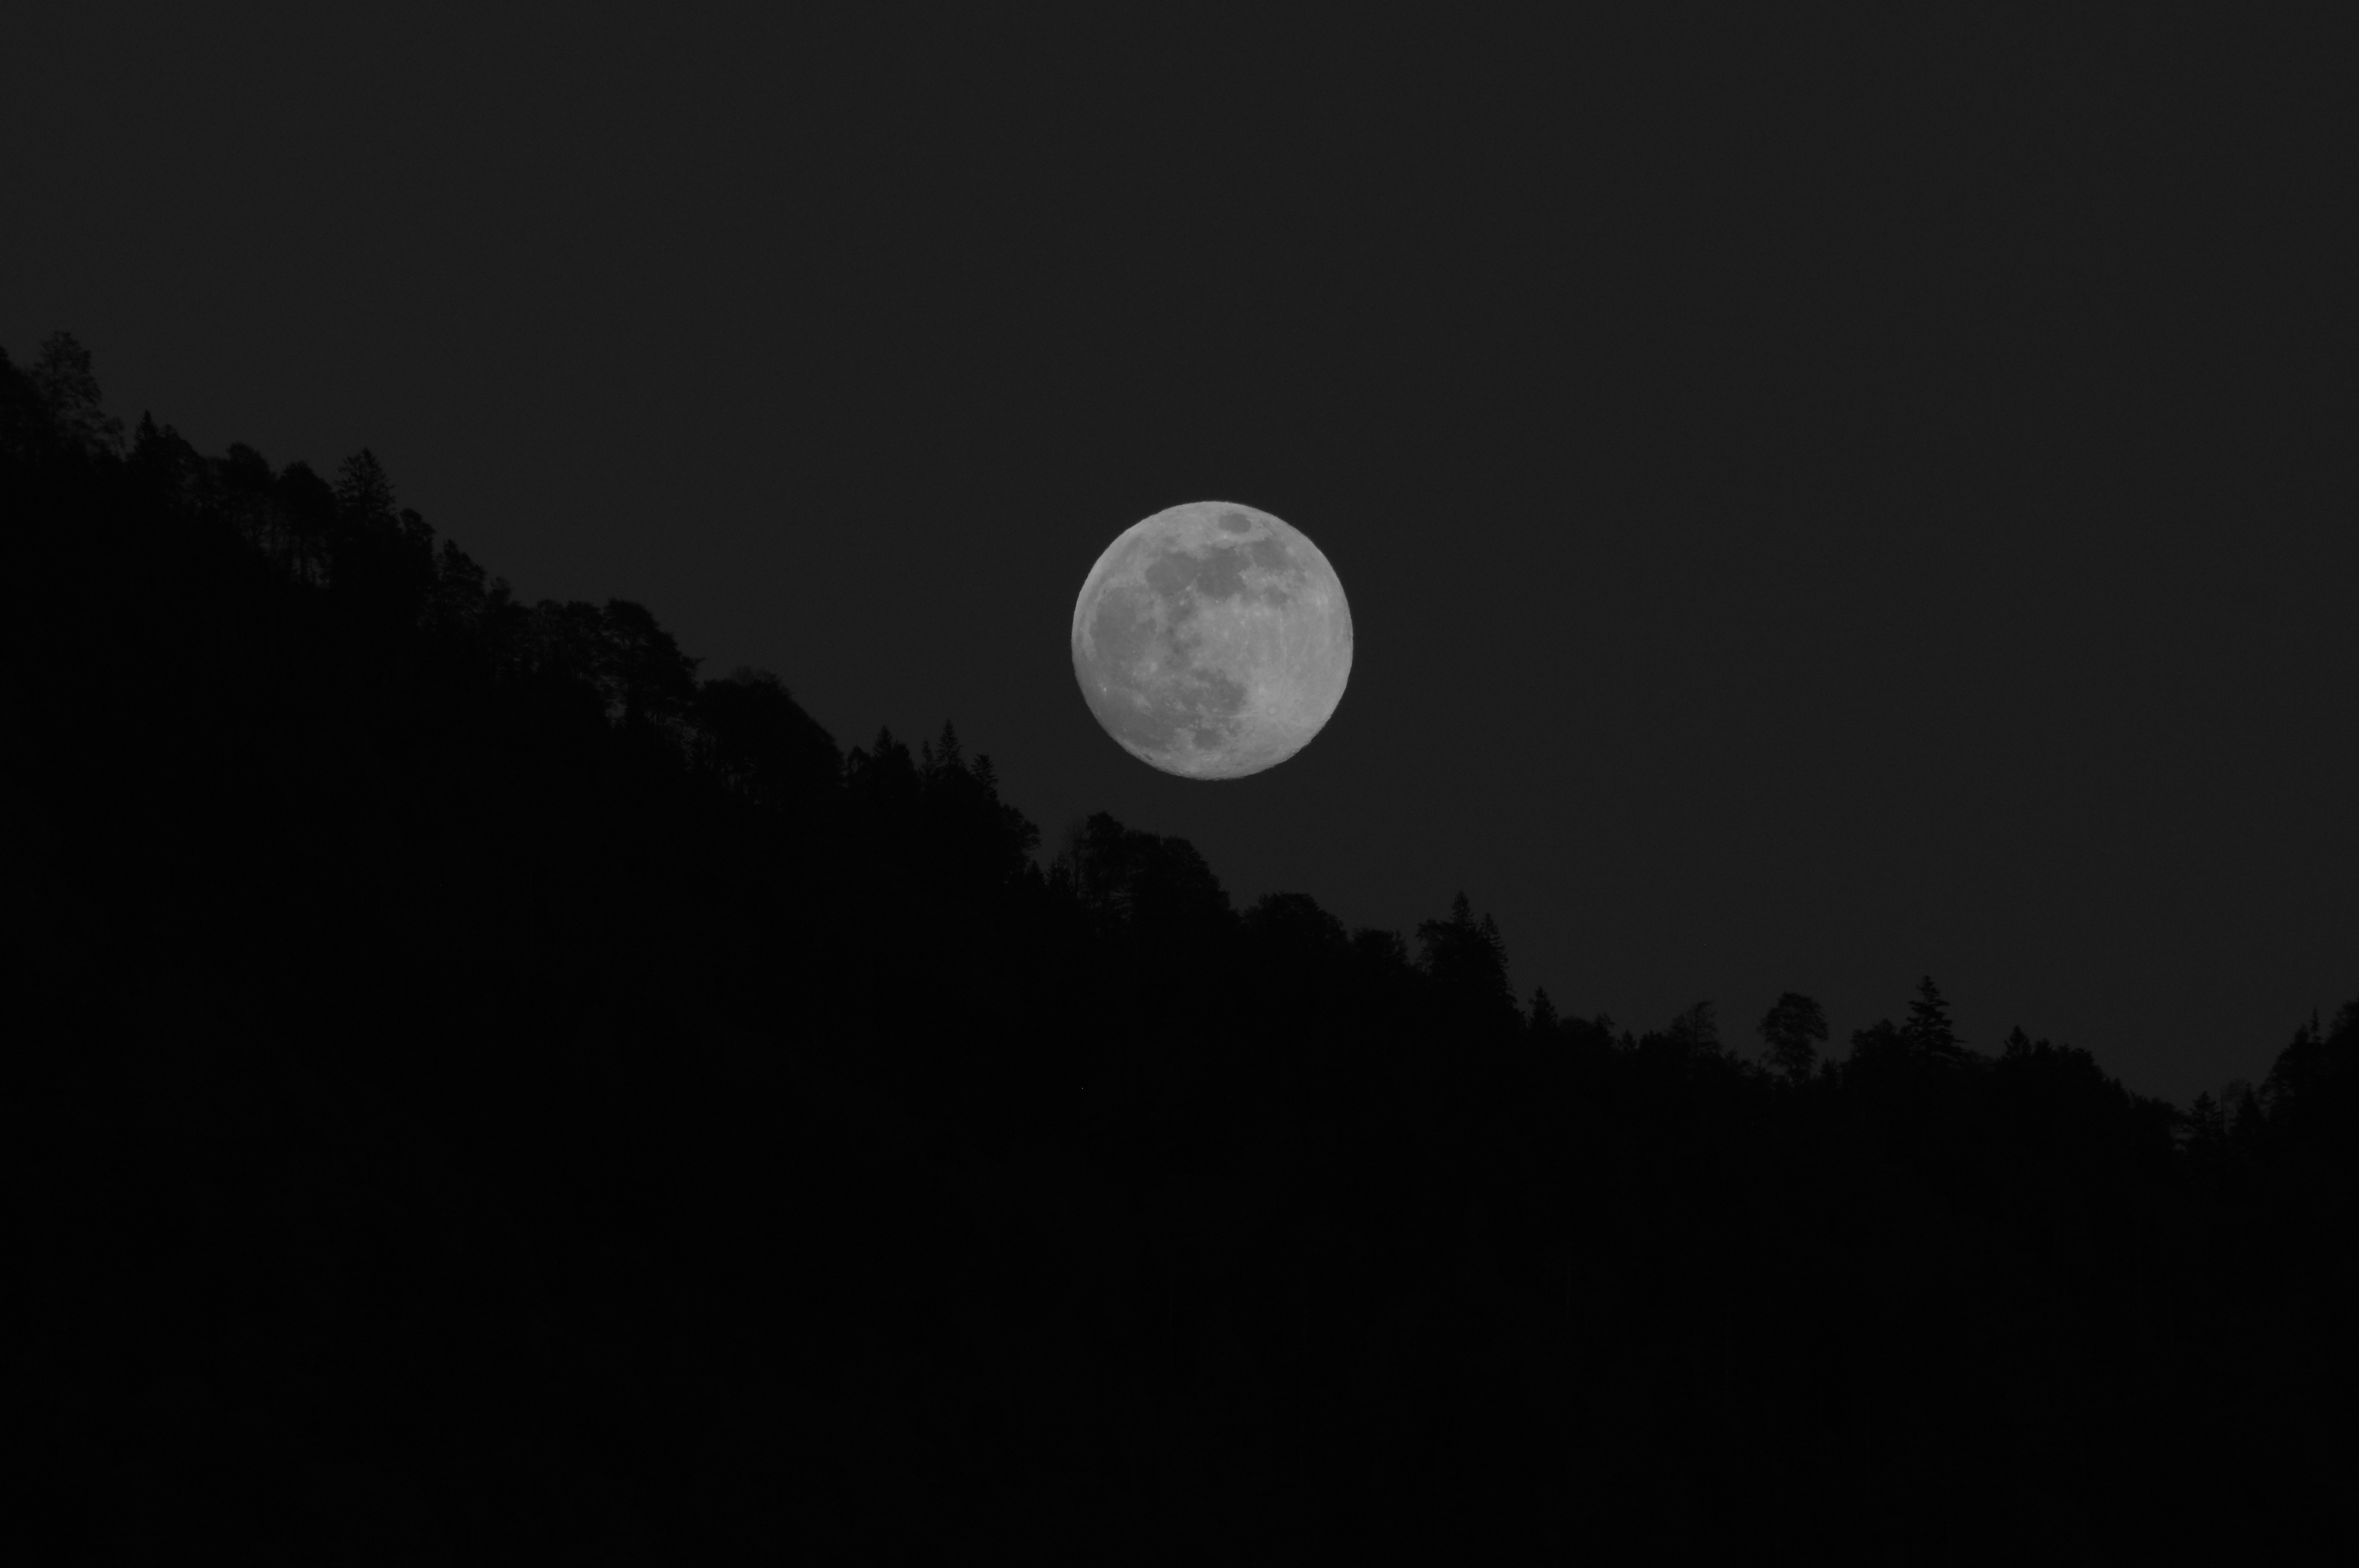 Download background moon, chb, full moon, trees, dark, bw